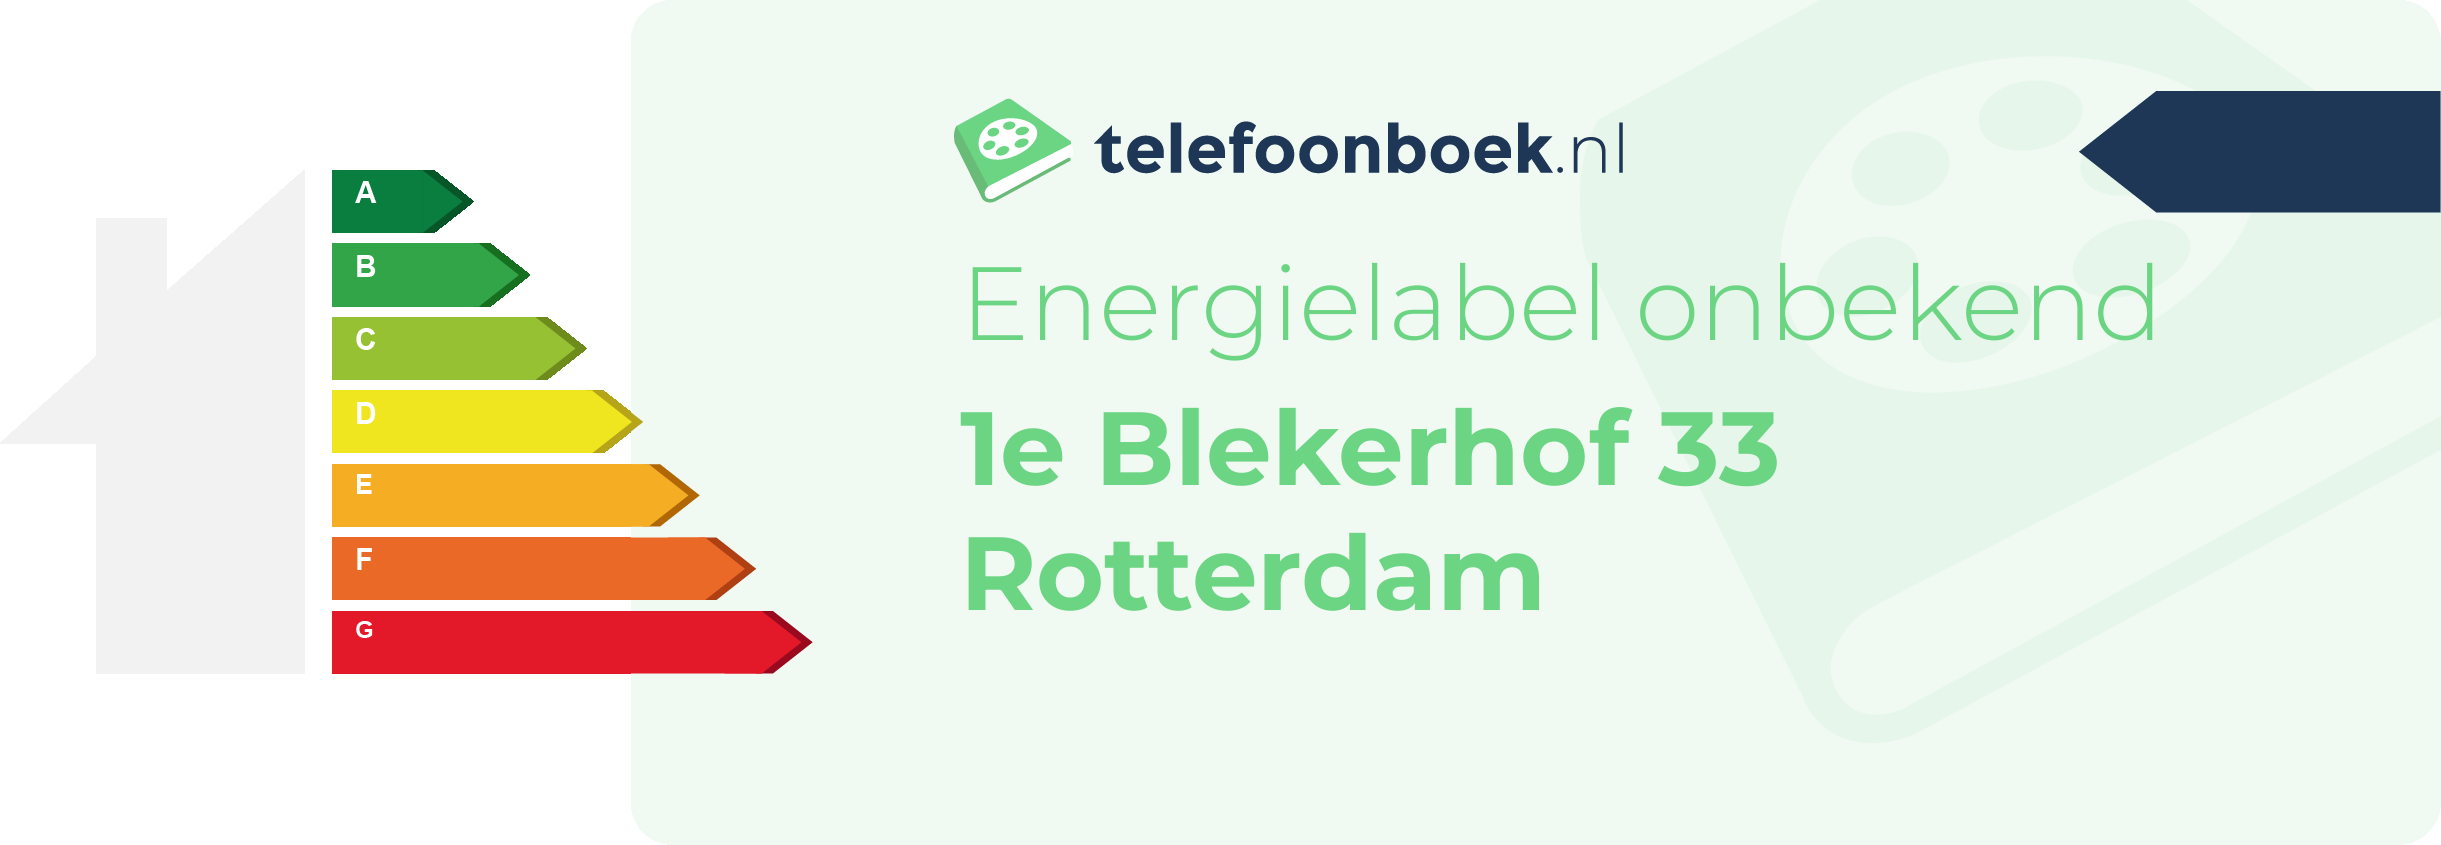 Energielabel 1e Blekerhof 33 Rotterdam